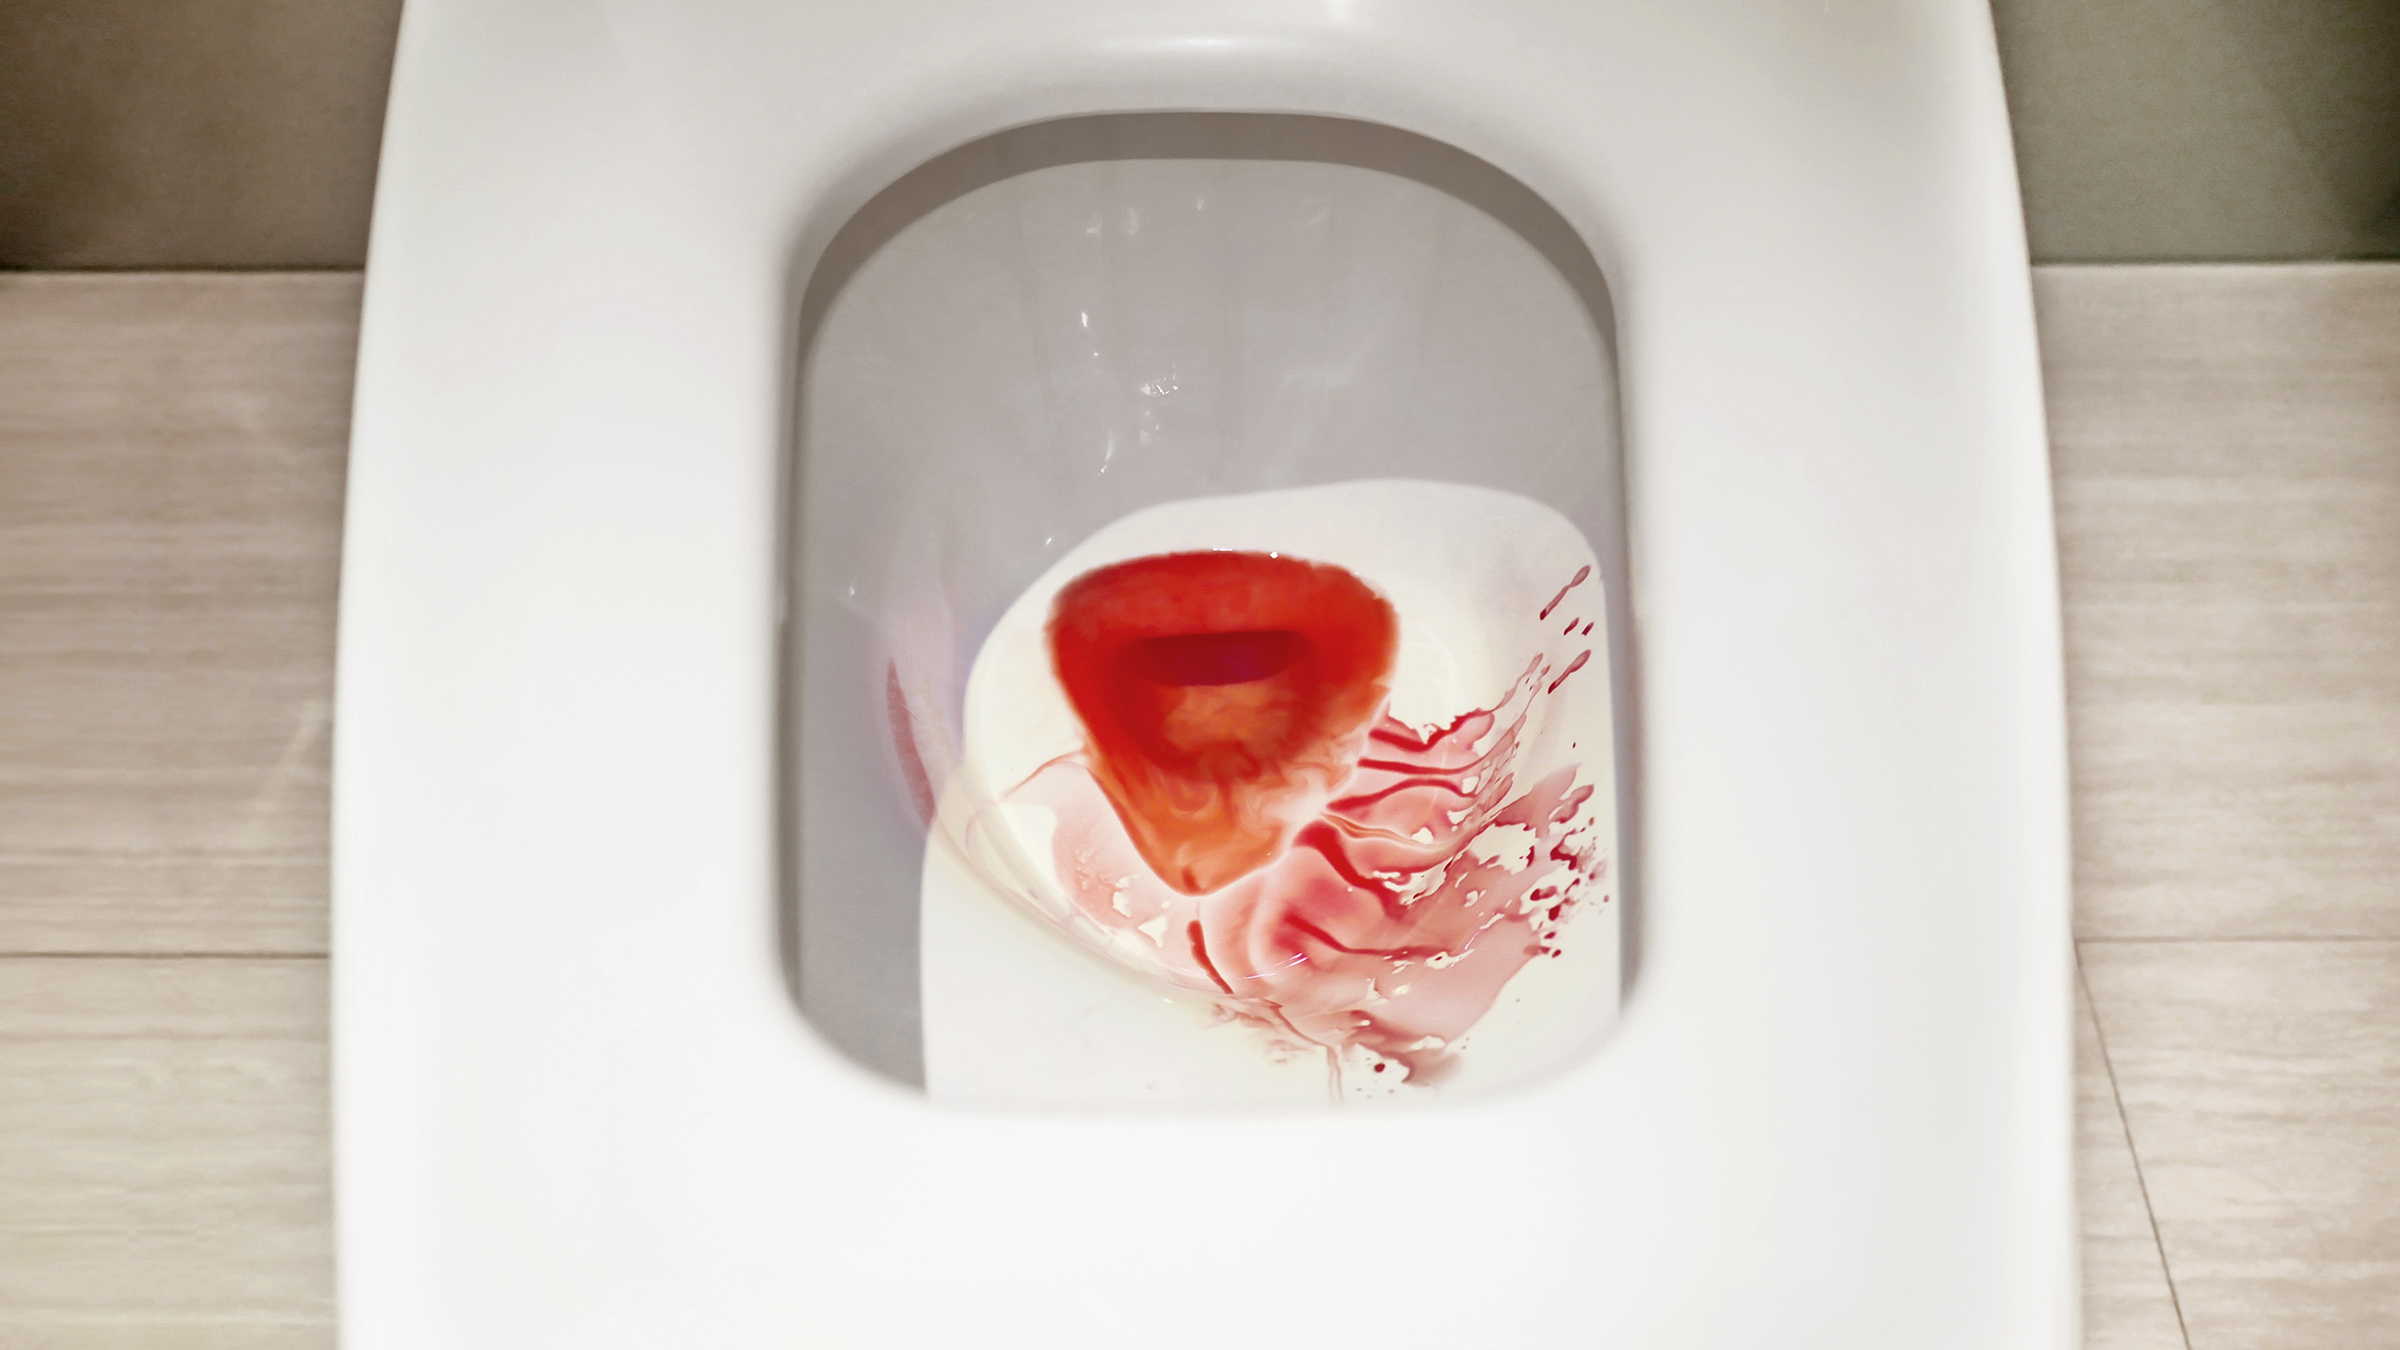 Blood In Toilet Bowl 984302058 